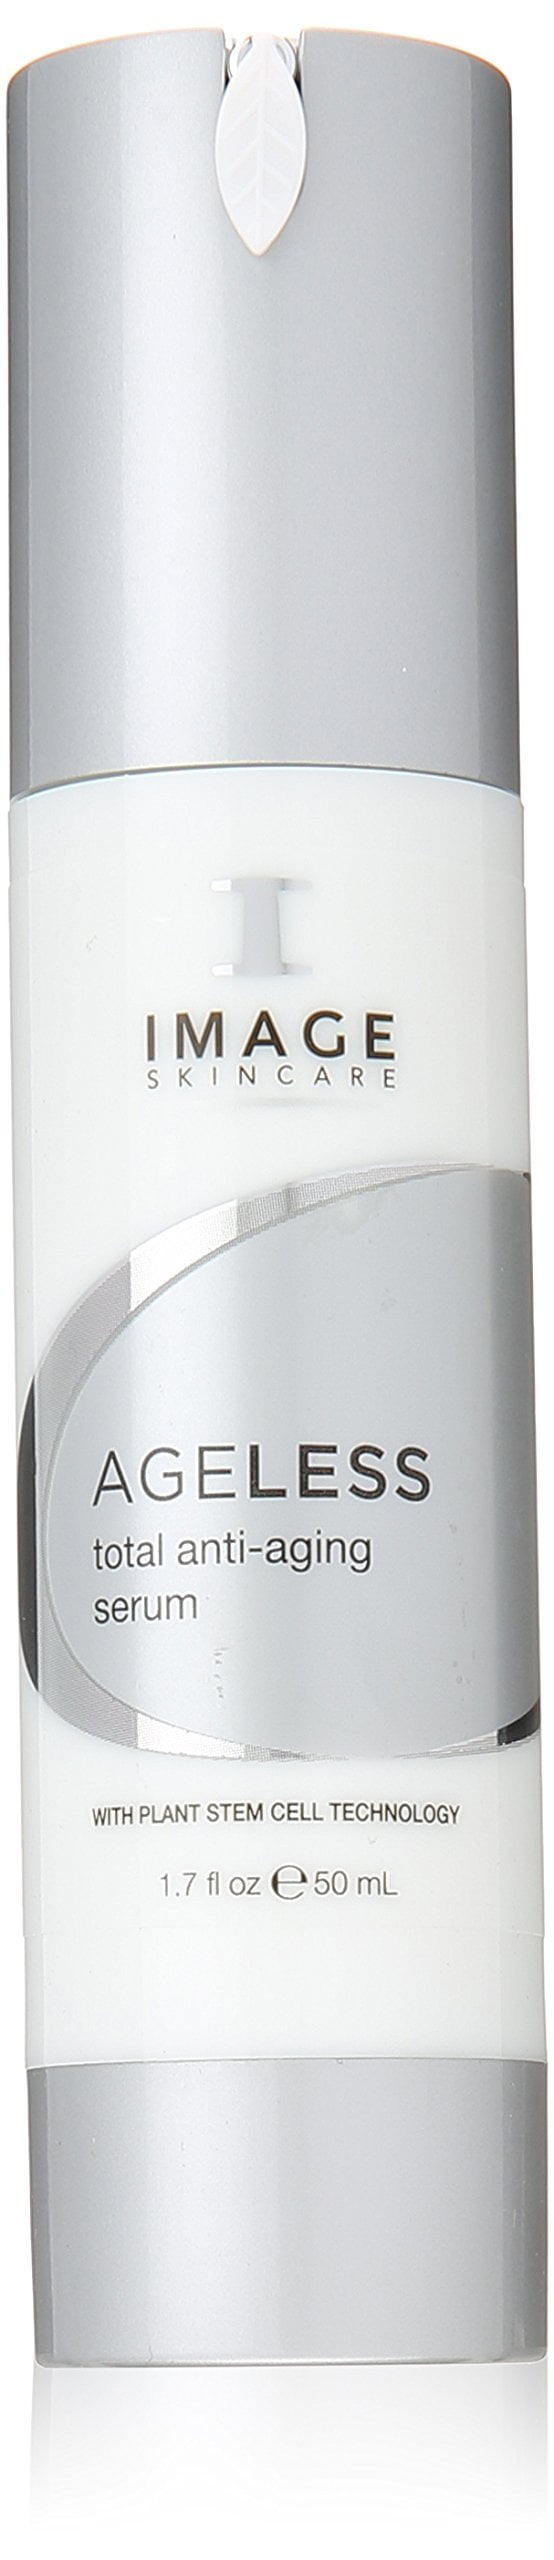 image ageless anti aging szérum)